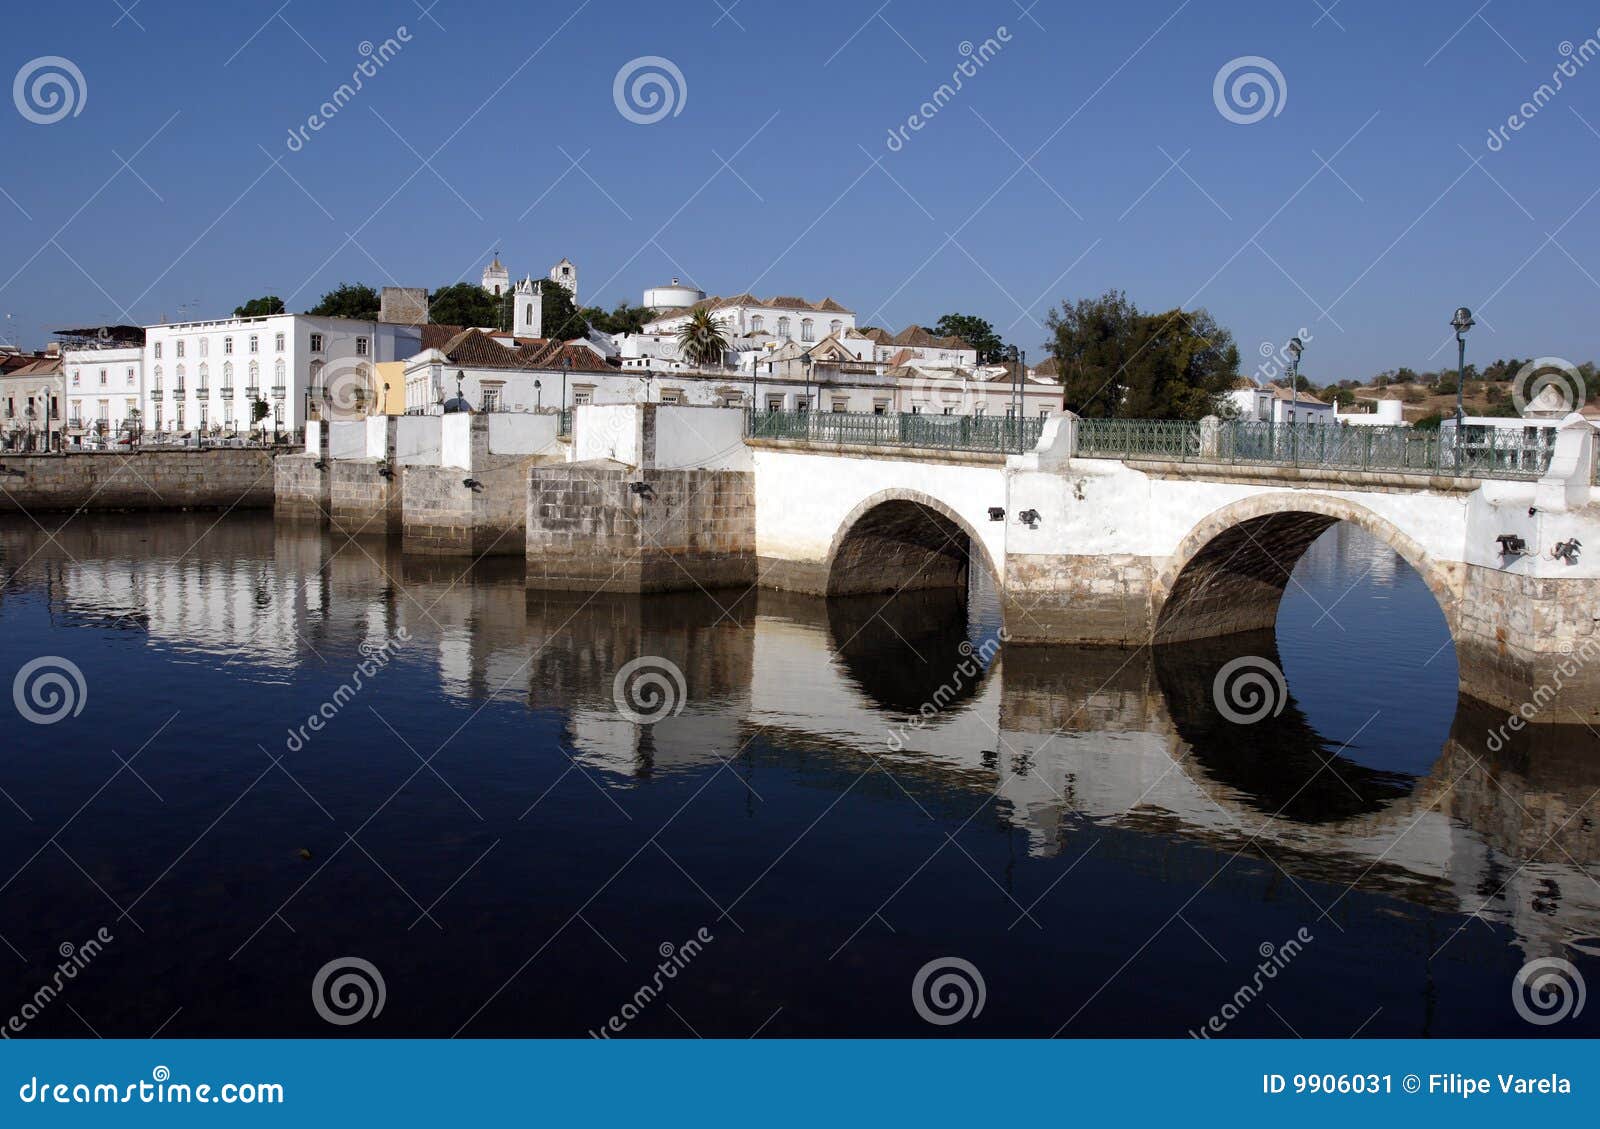 portugal, tavira, algarve, old roman bridge